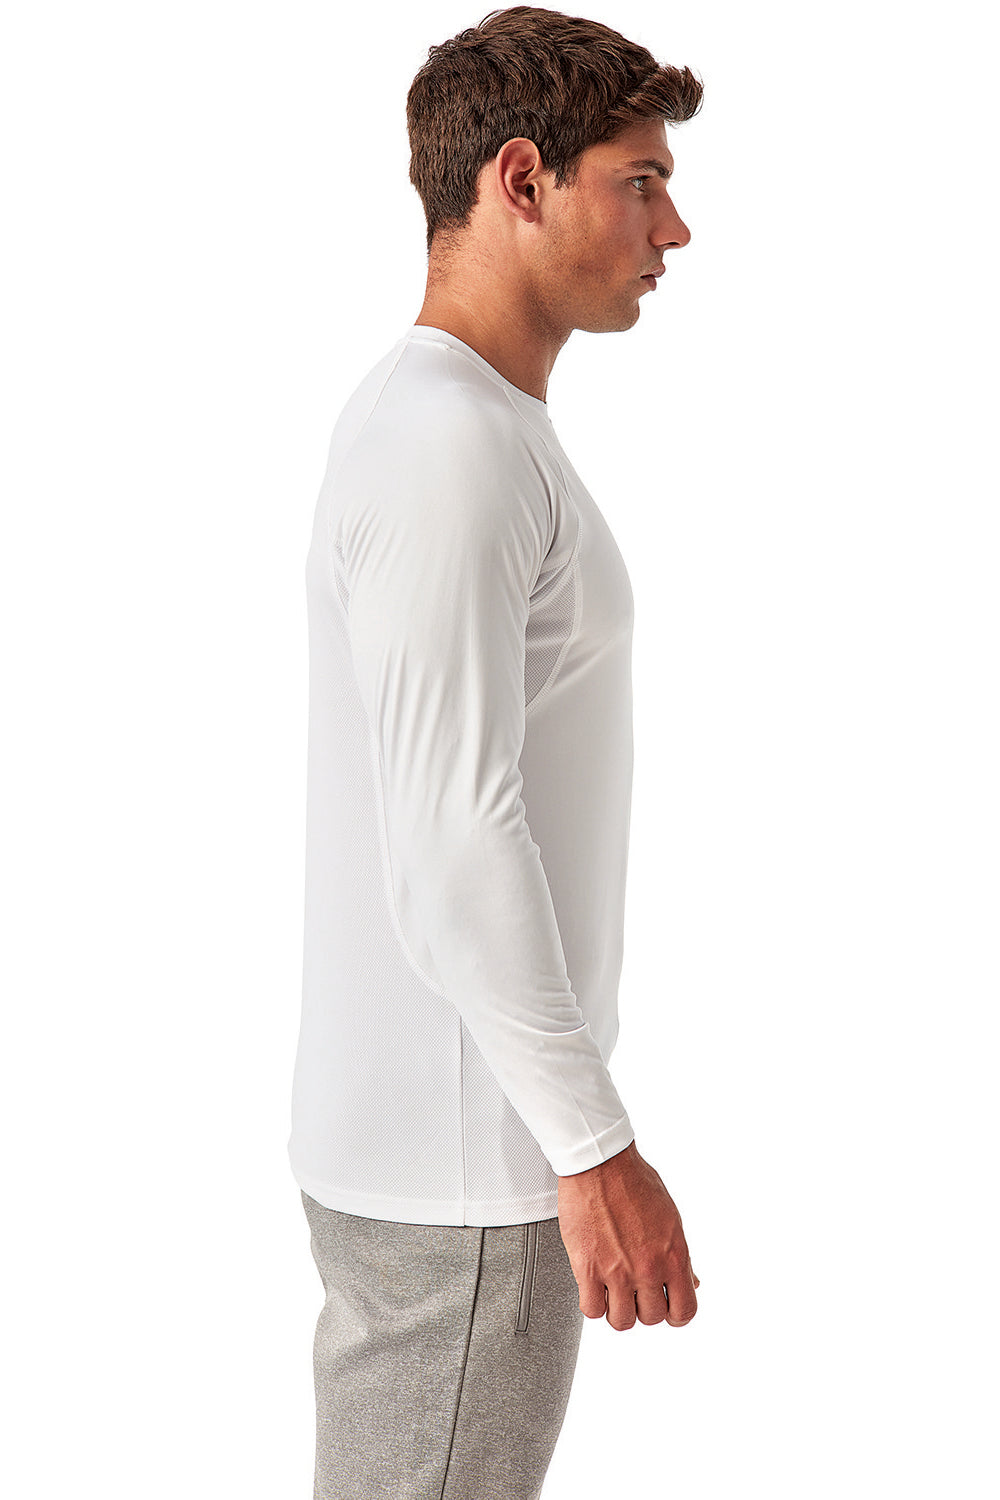 TriDri TD050 Mens Panelled Tech Moisture Wicking Long Sleeve Crewneck T-Shirt White Side